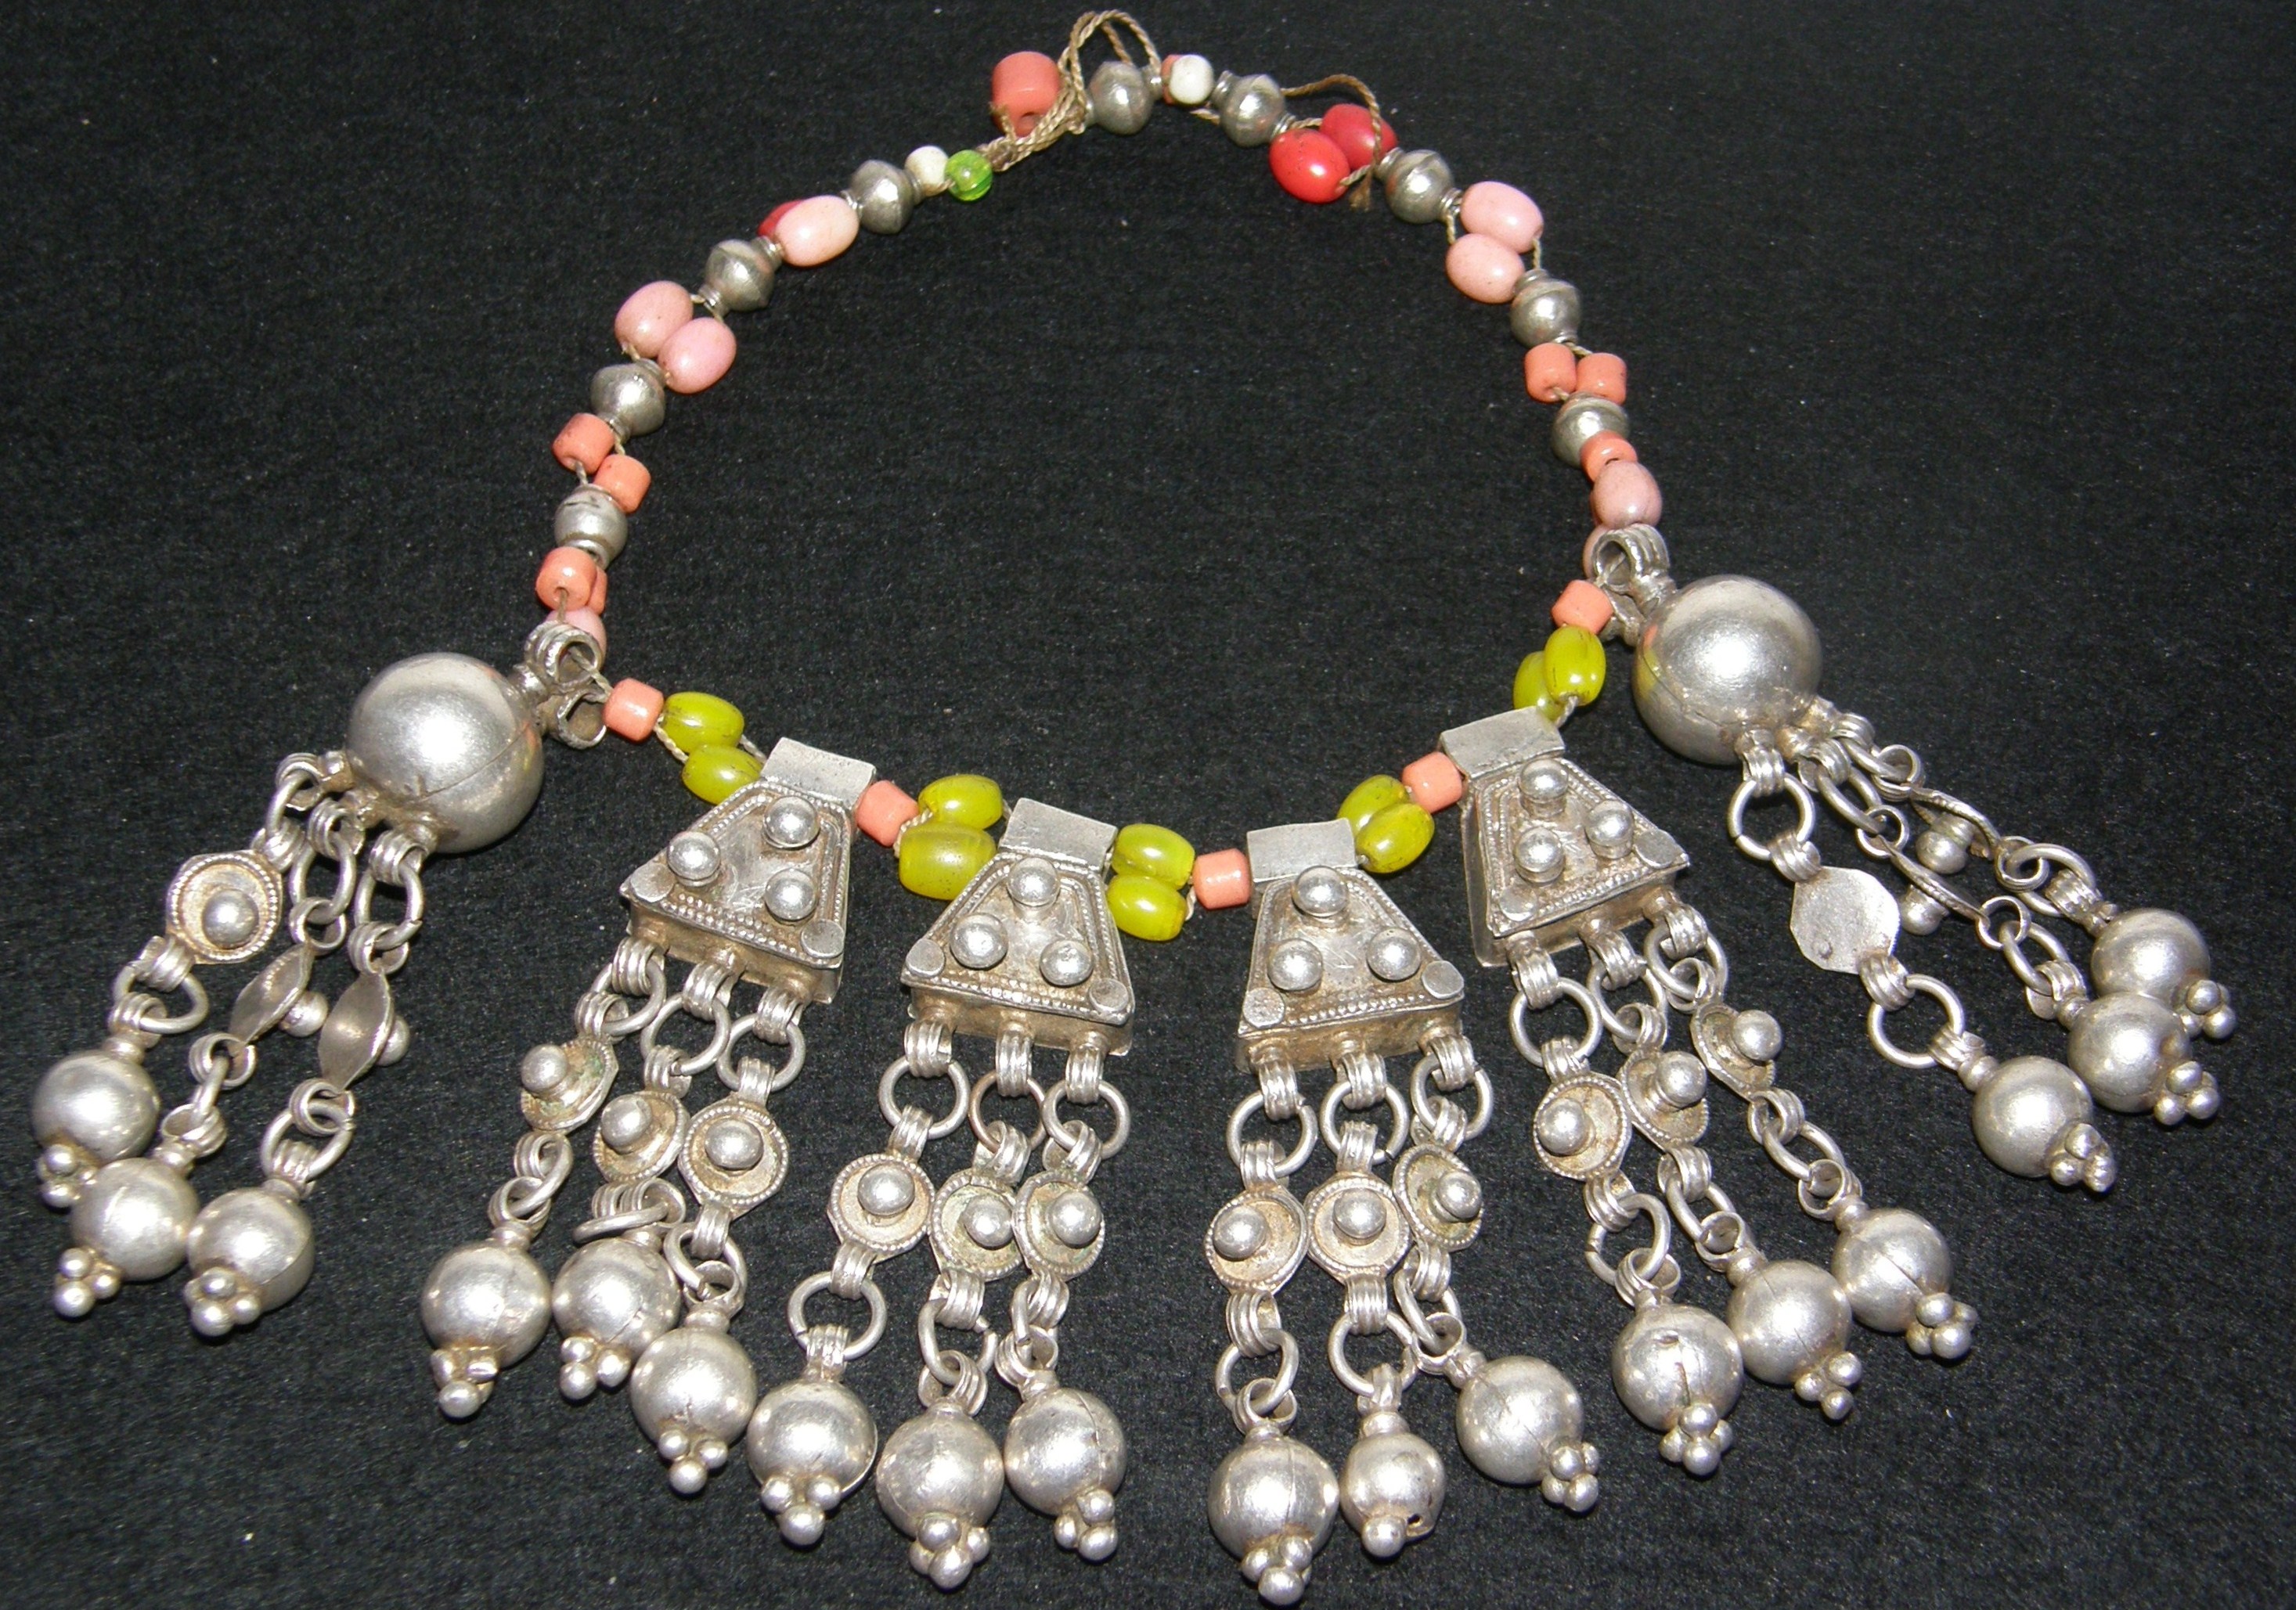 Ethnic silver necklaces